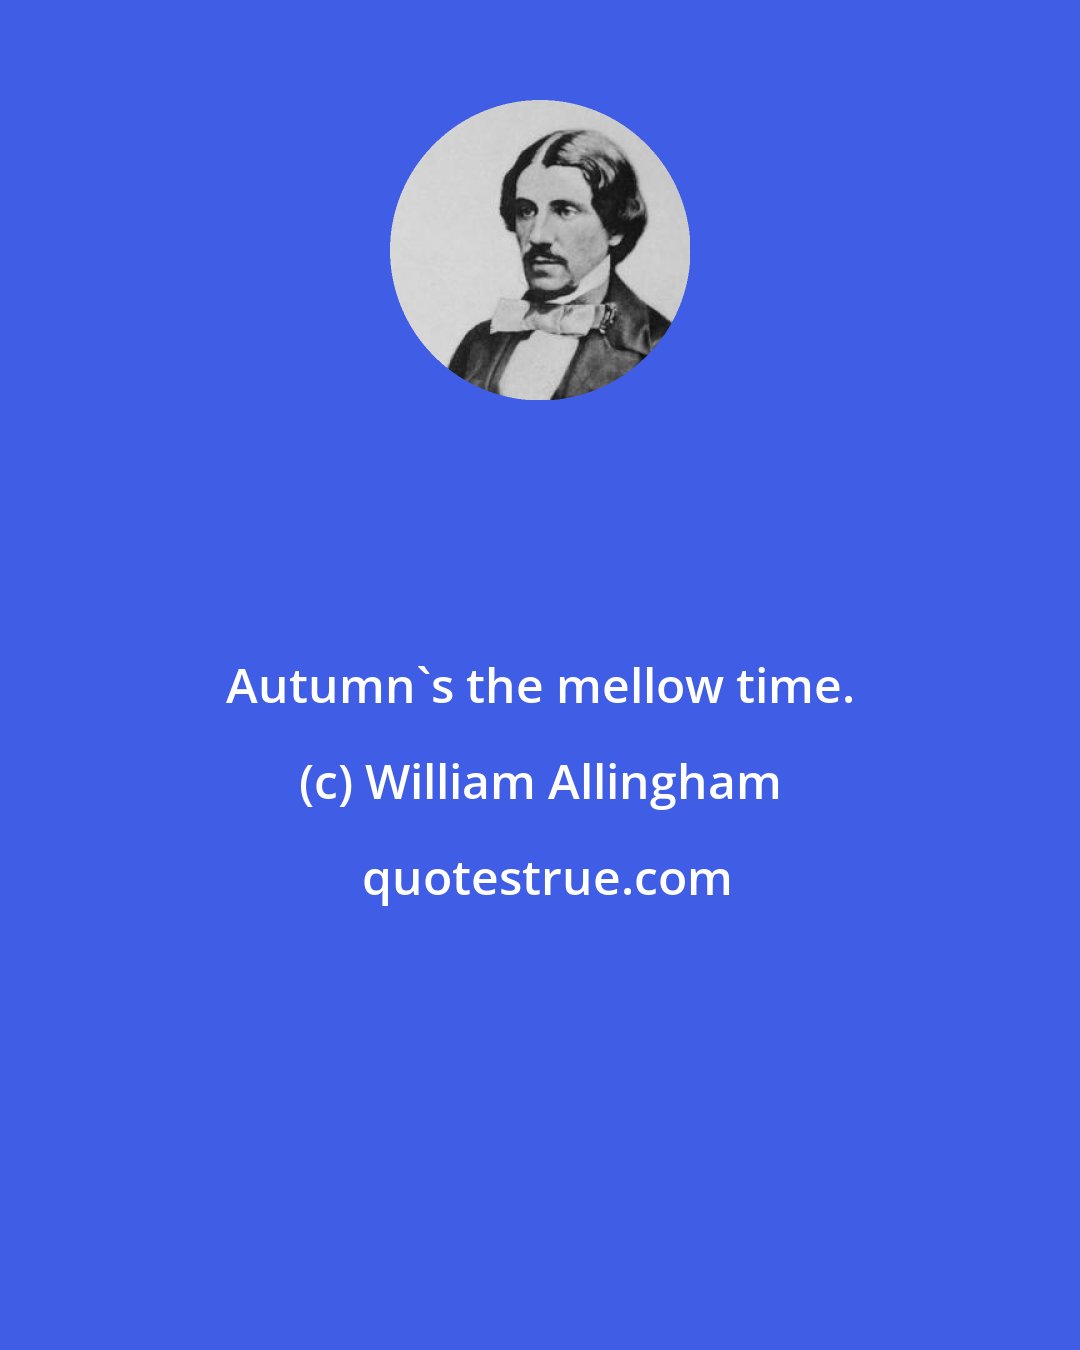 William Allingham: Autumn's the mellow time.